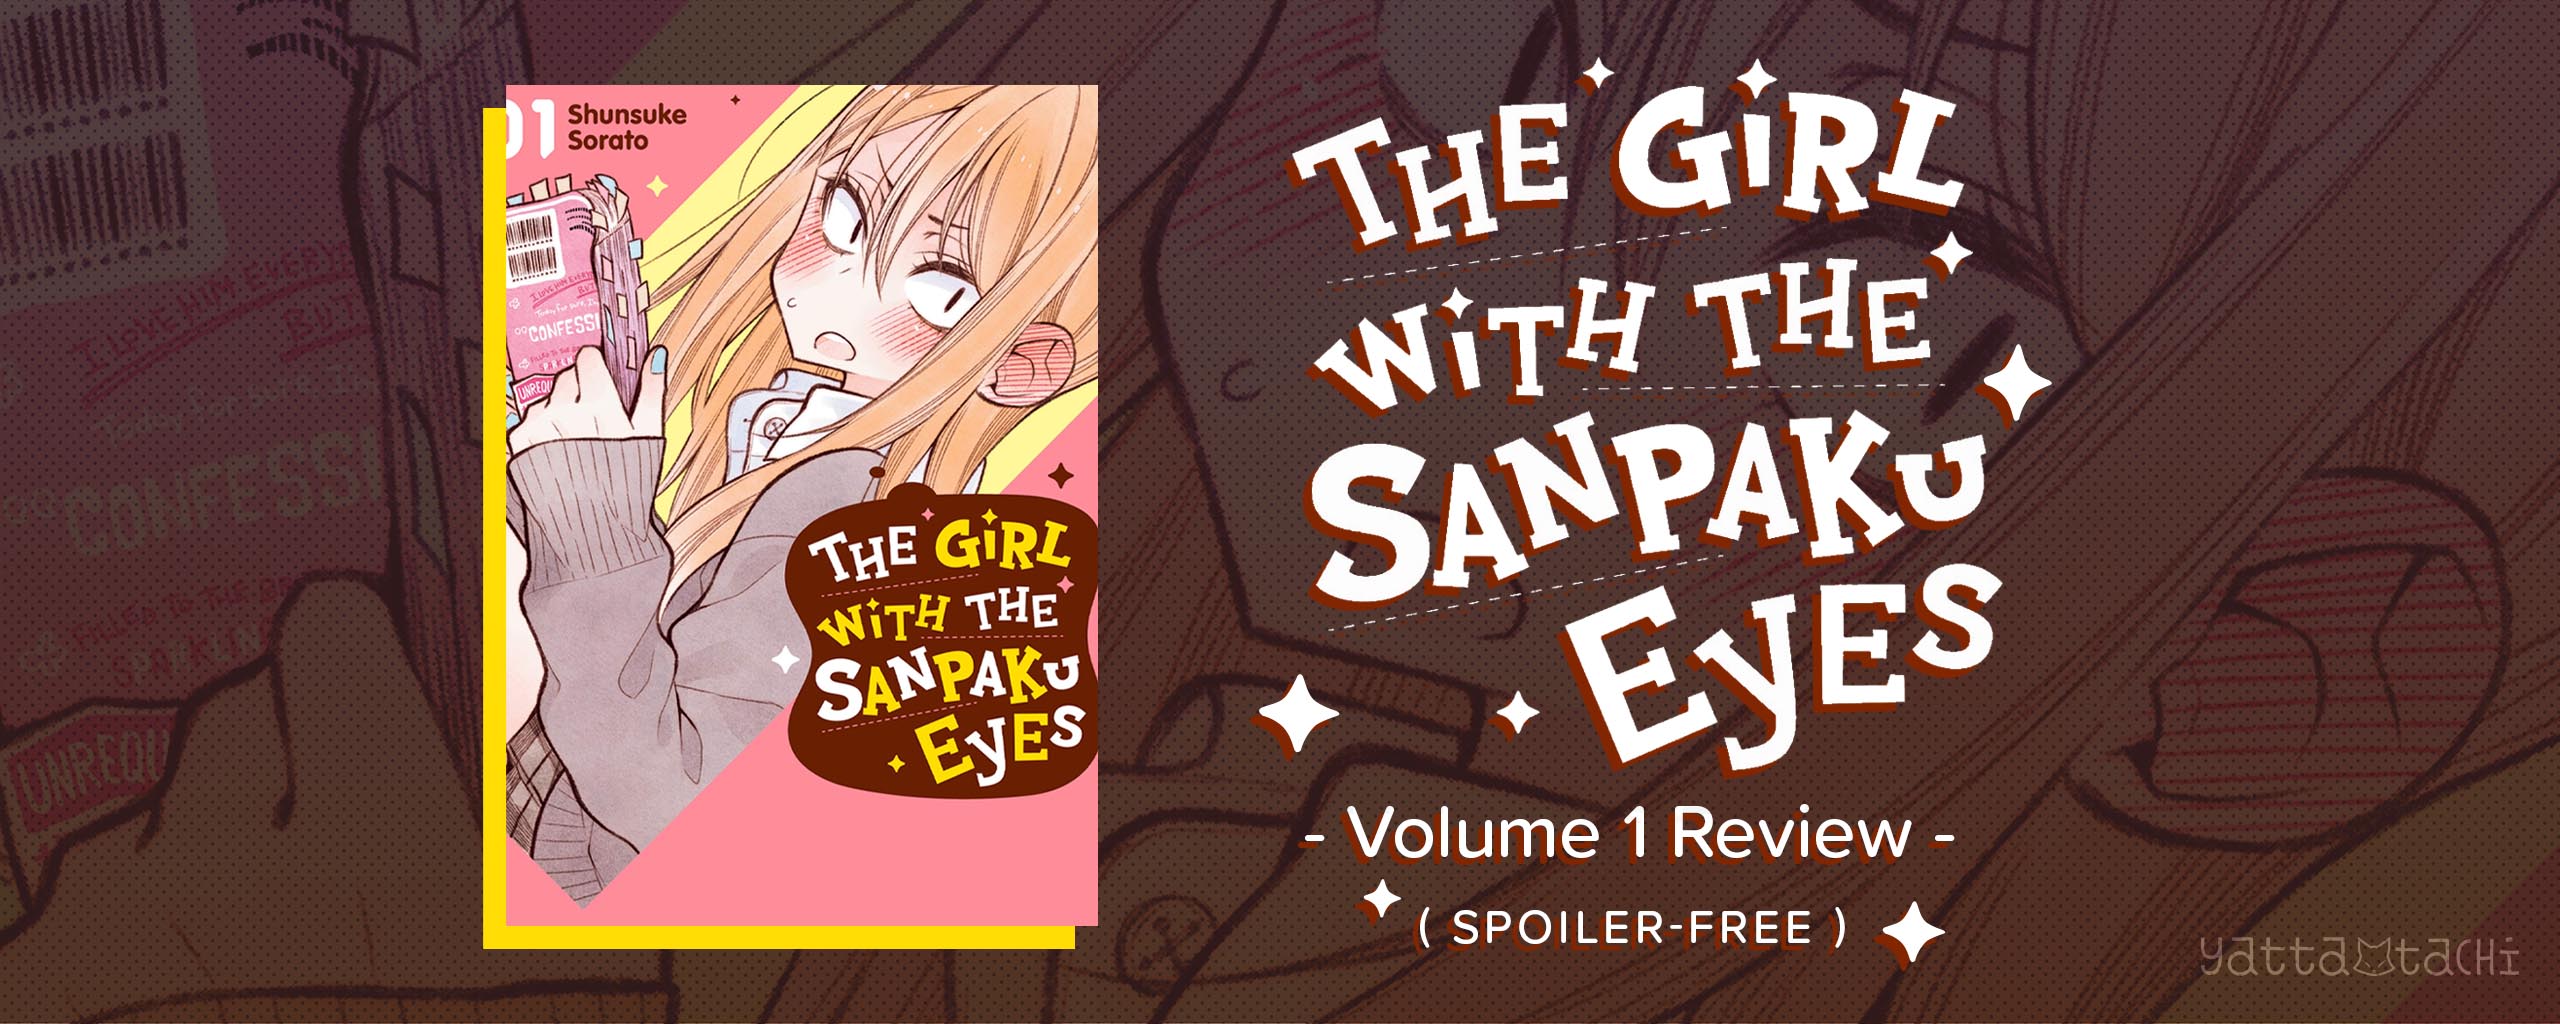 The Story of a Girl with Sanpaku Eyes ⑤ - manga post - Imgur